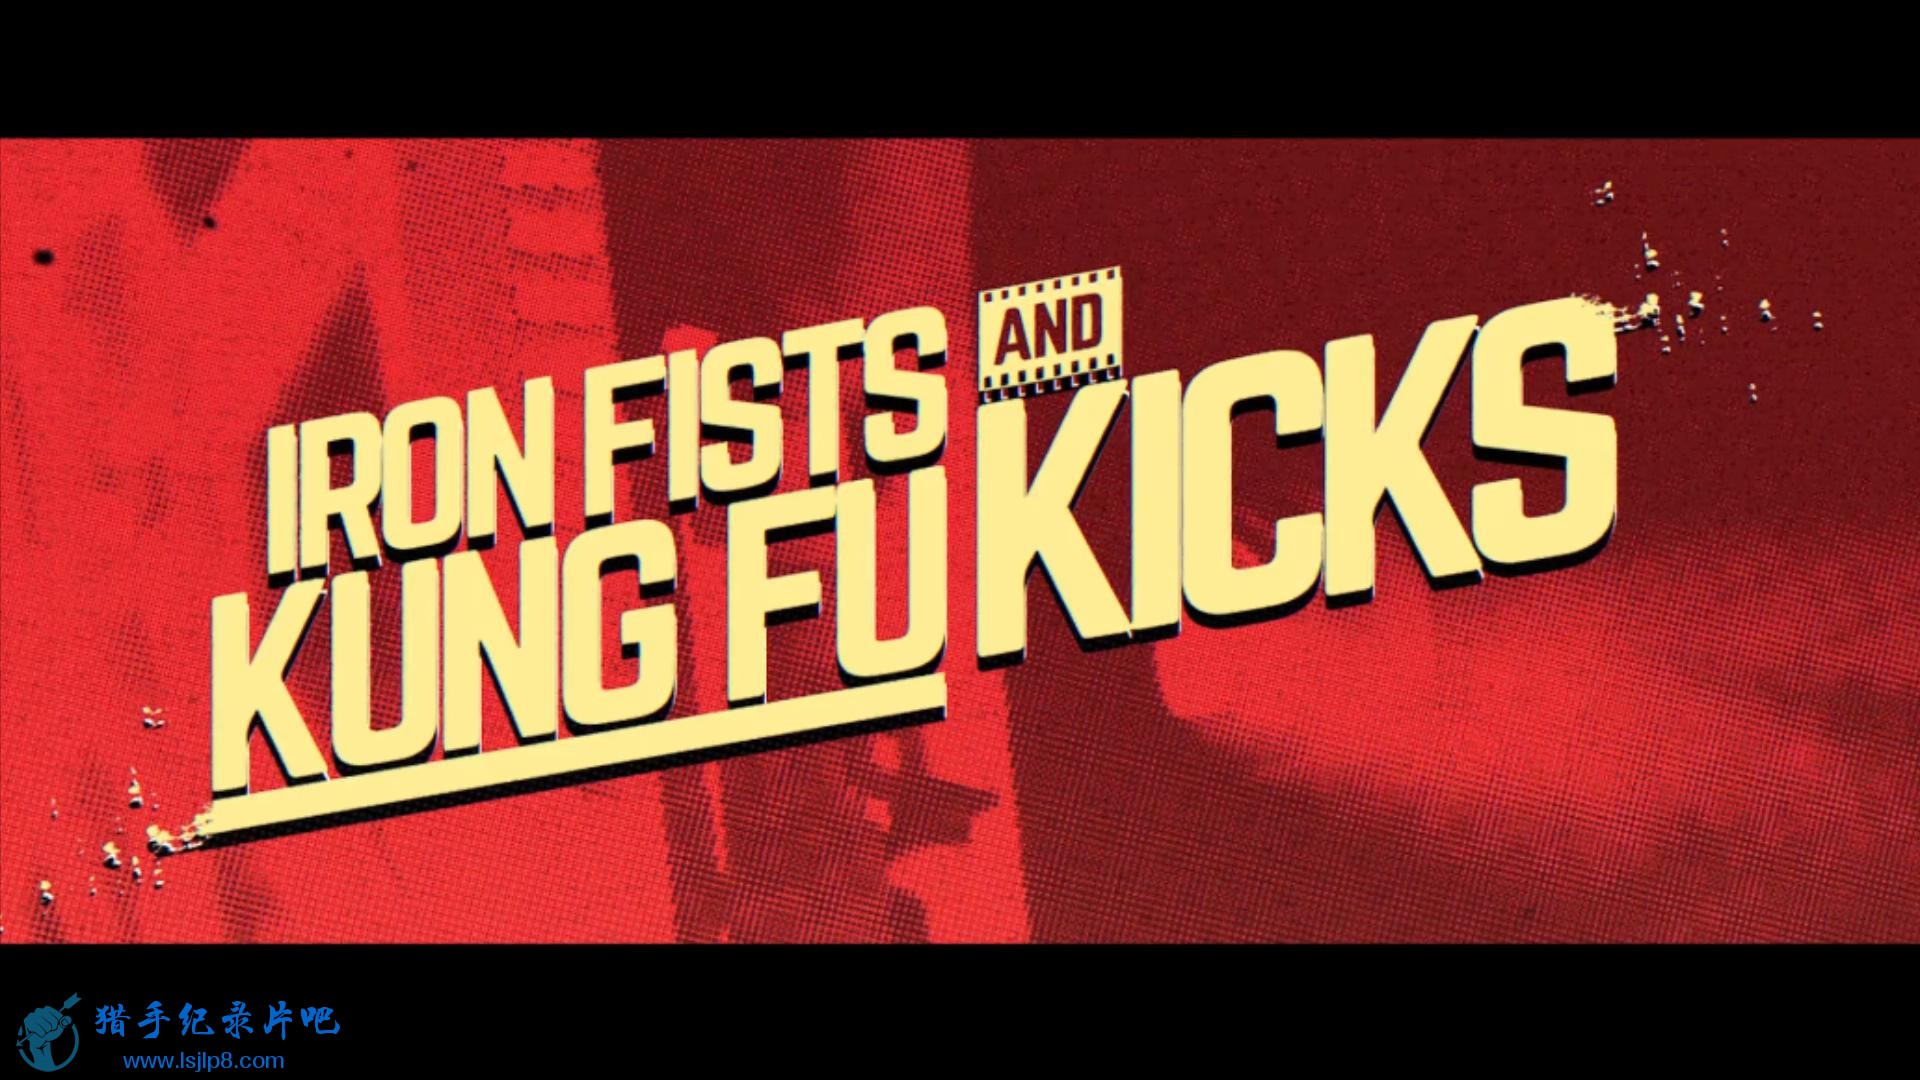 Iron.Fists.and.Kung-Fu.Kicks.2019.1080p.NF.WEB-DL.DDP5.1.x264-pawel2006.mkv_2020.jpg